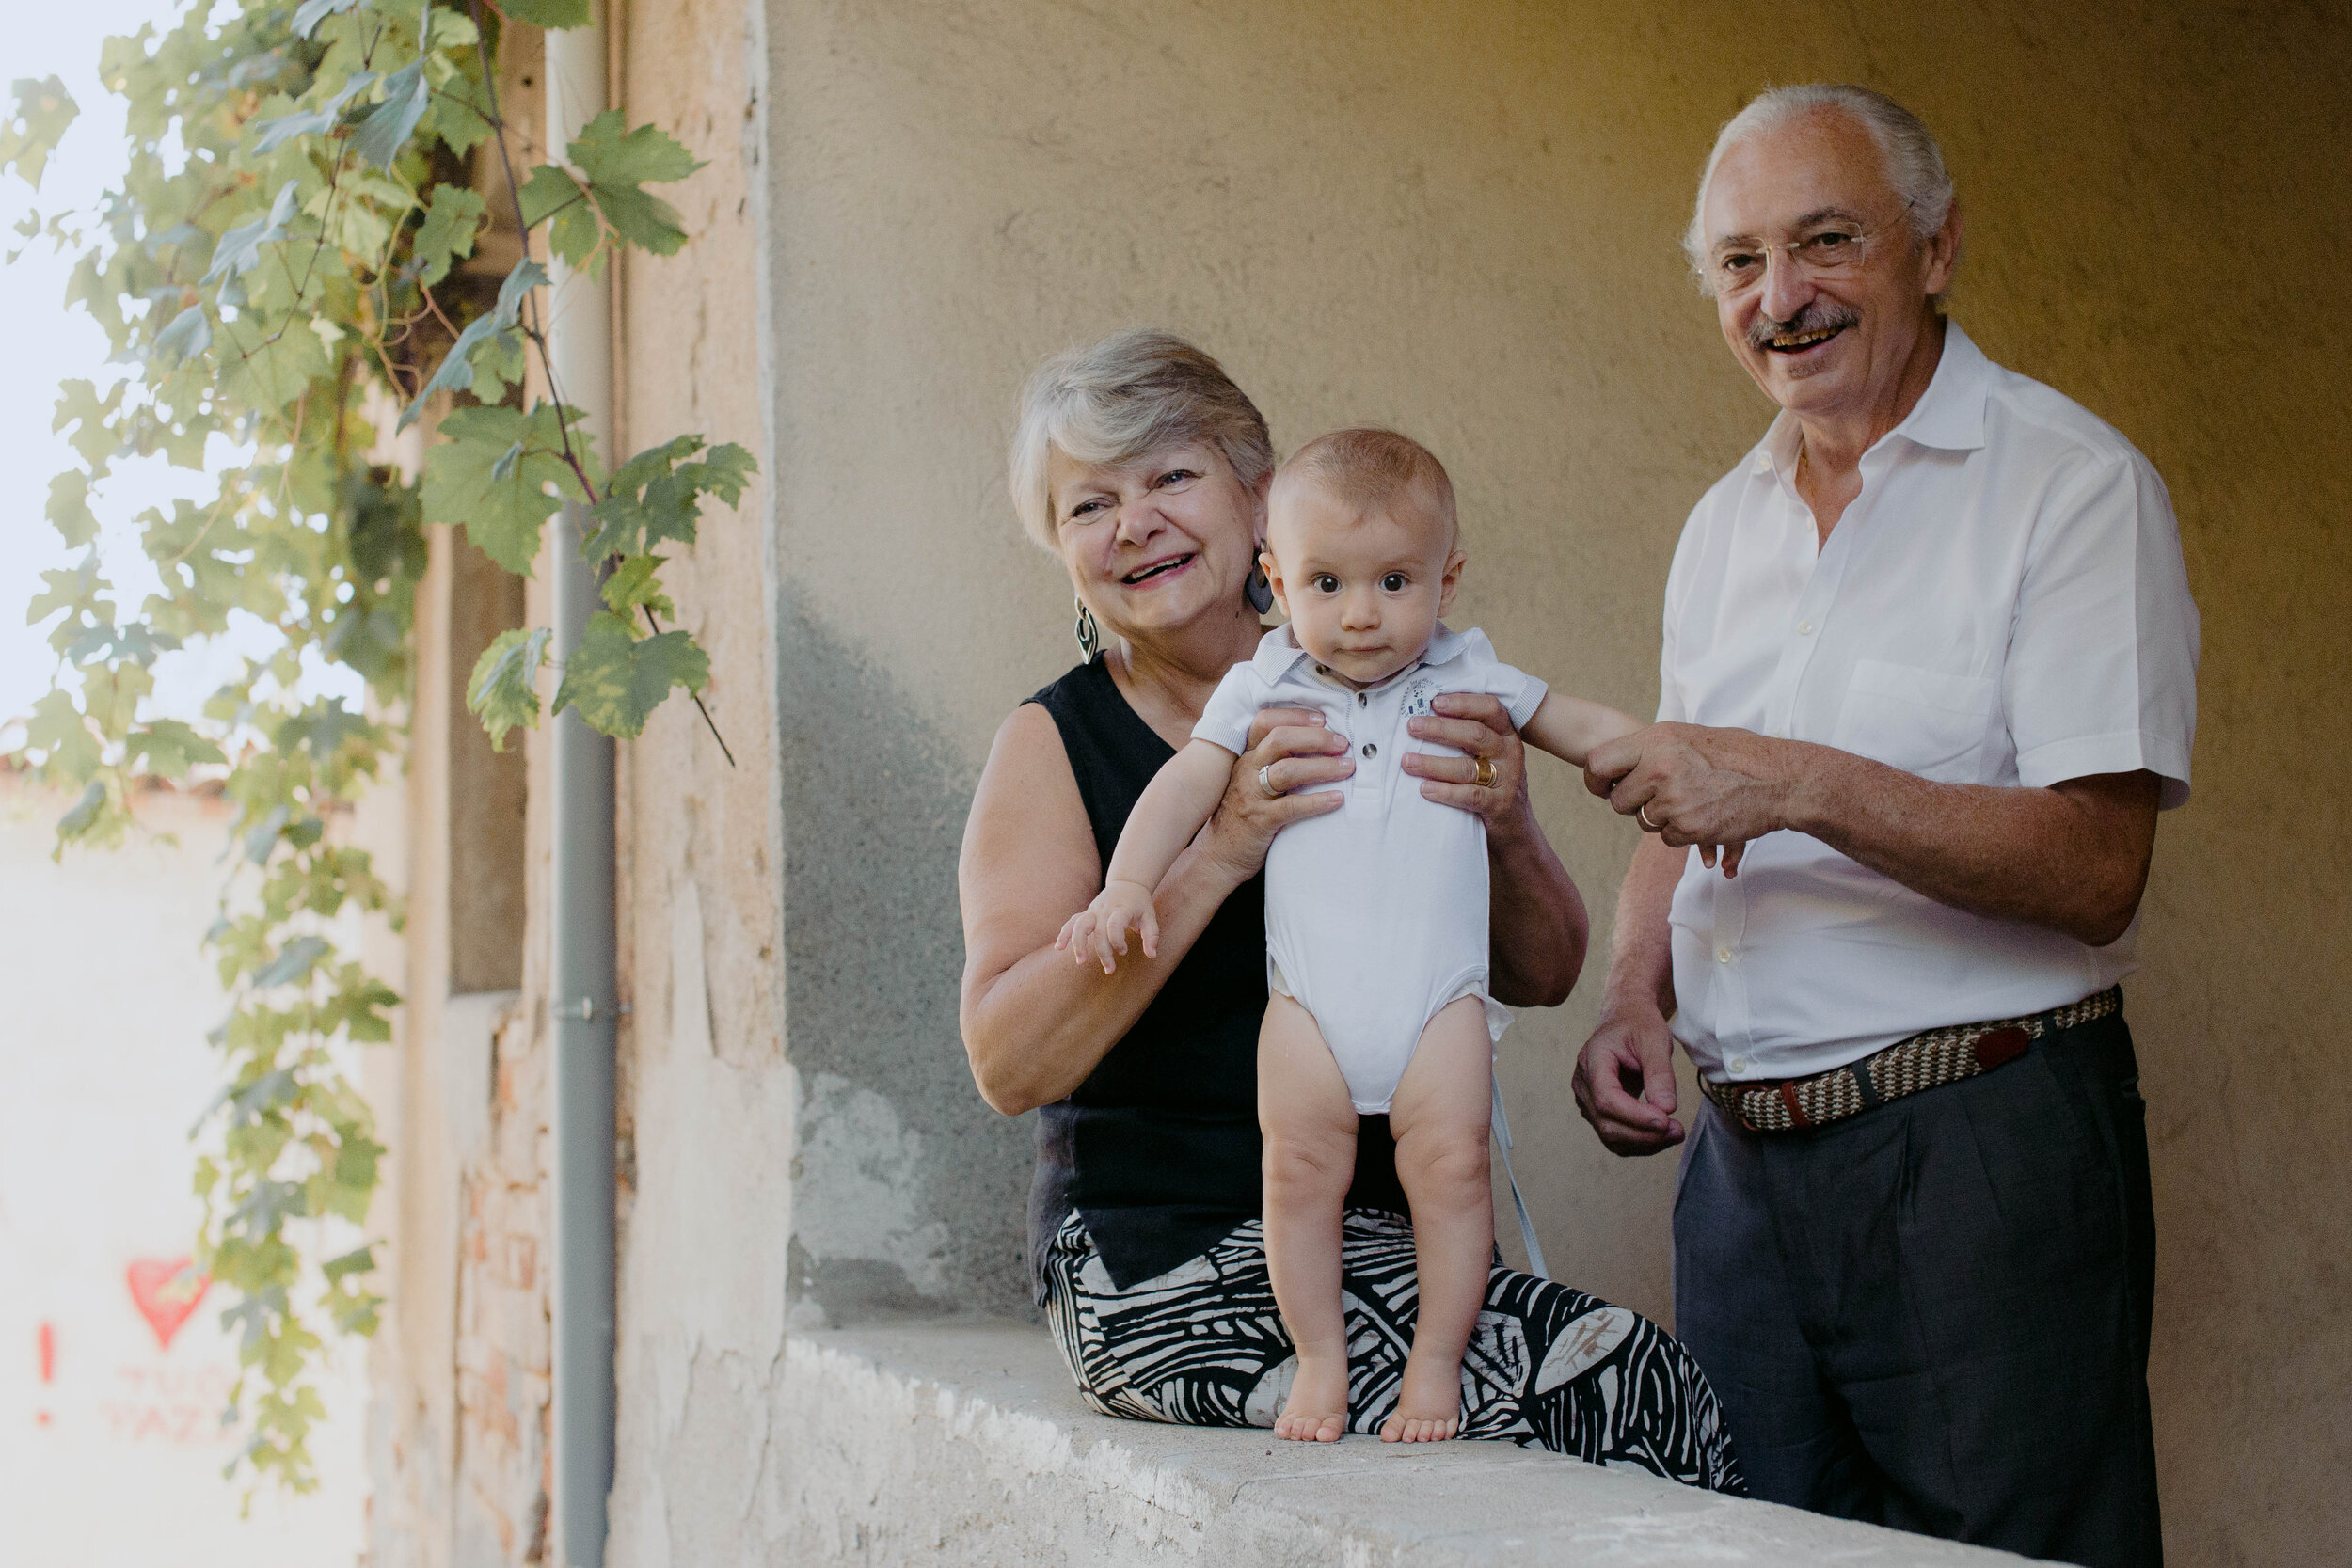 001 - Joele con i nonni - Miriam Callegari Fotografa.JPG